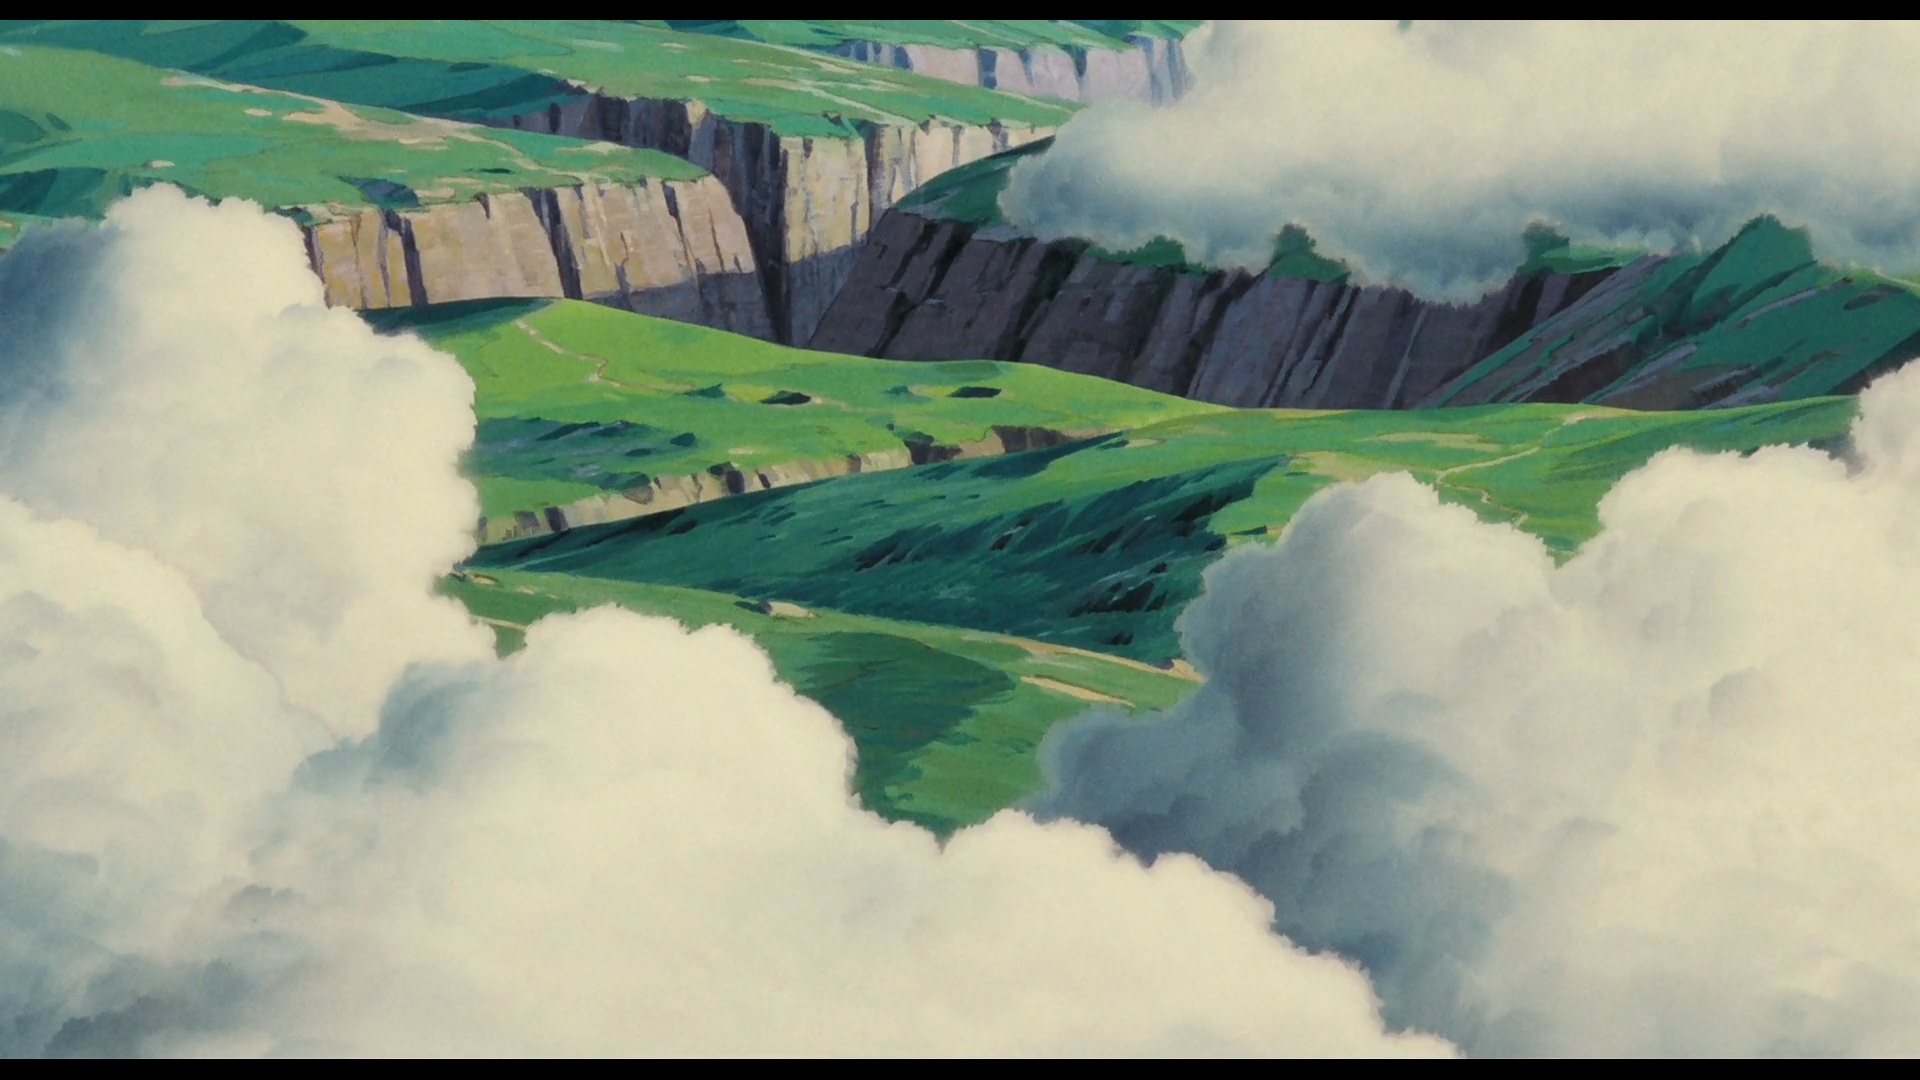 Anime Laputa Castle In The Sky 1920x1080